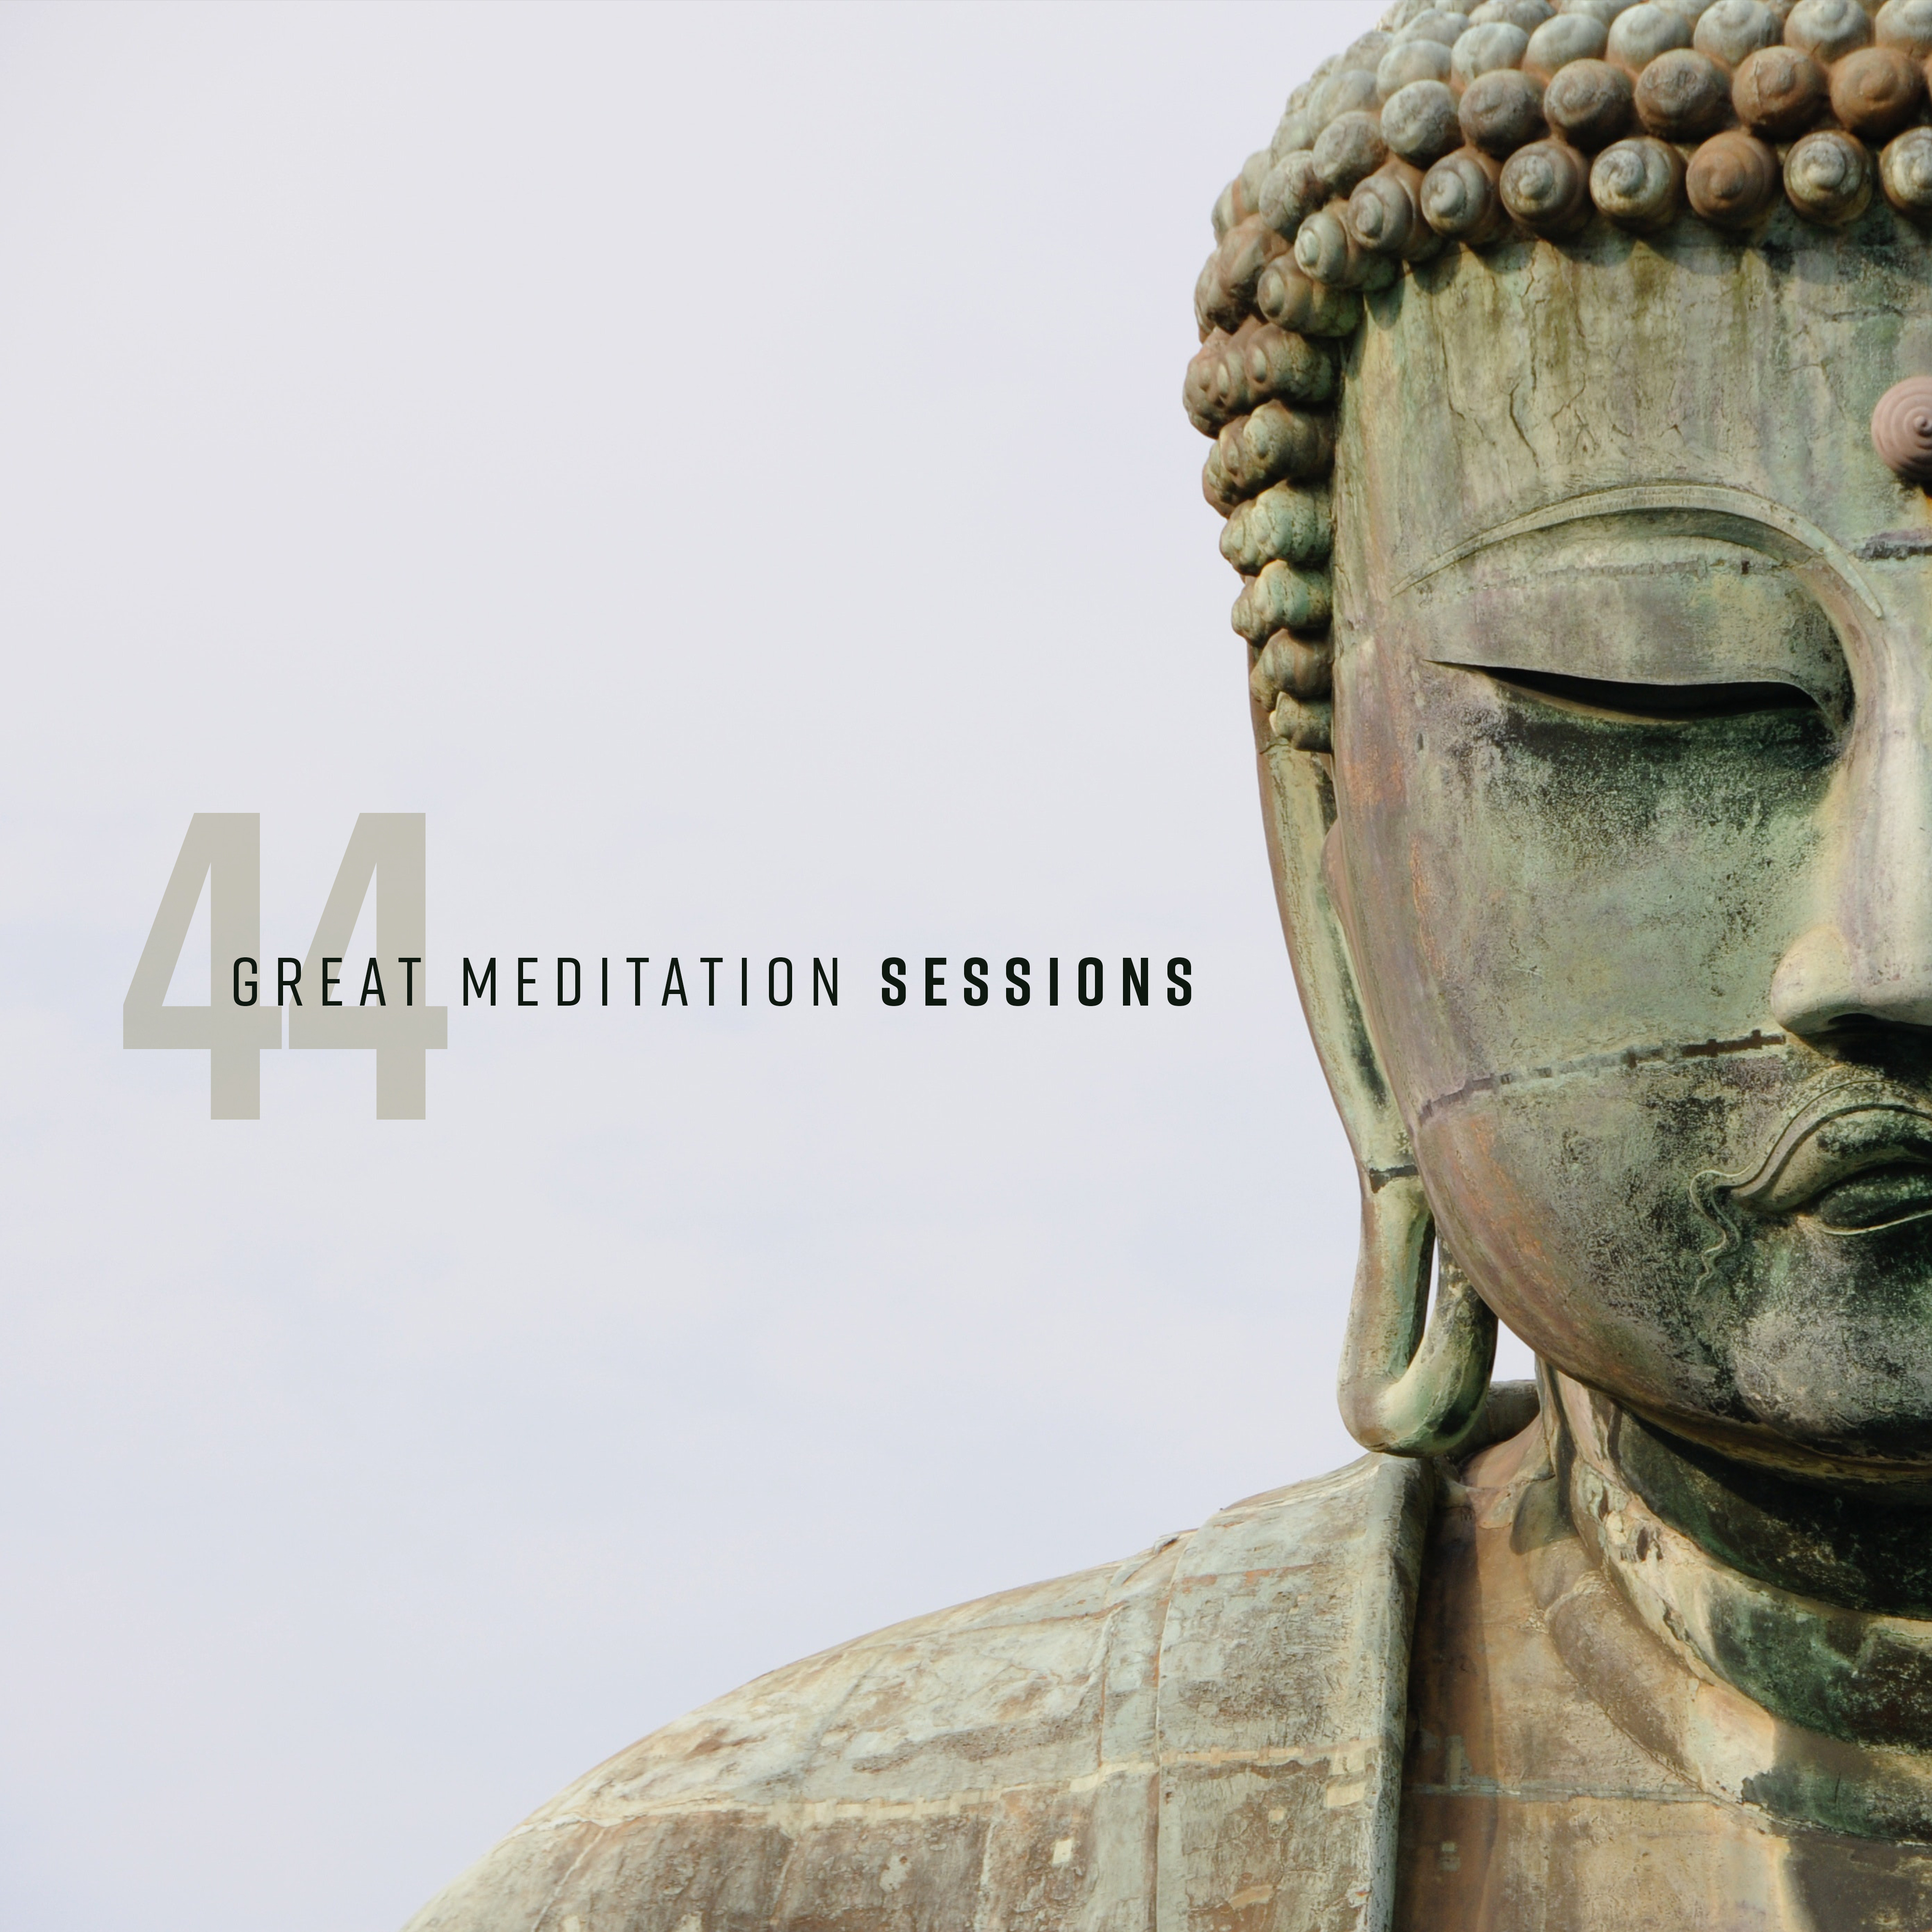 44 Great Meditation Sessions